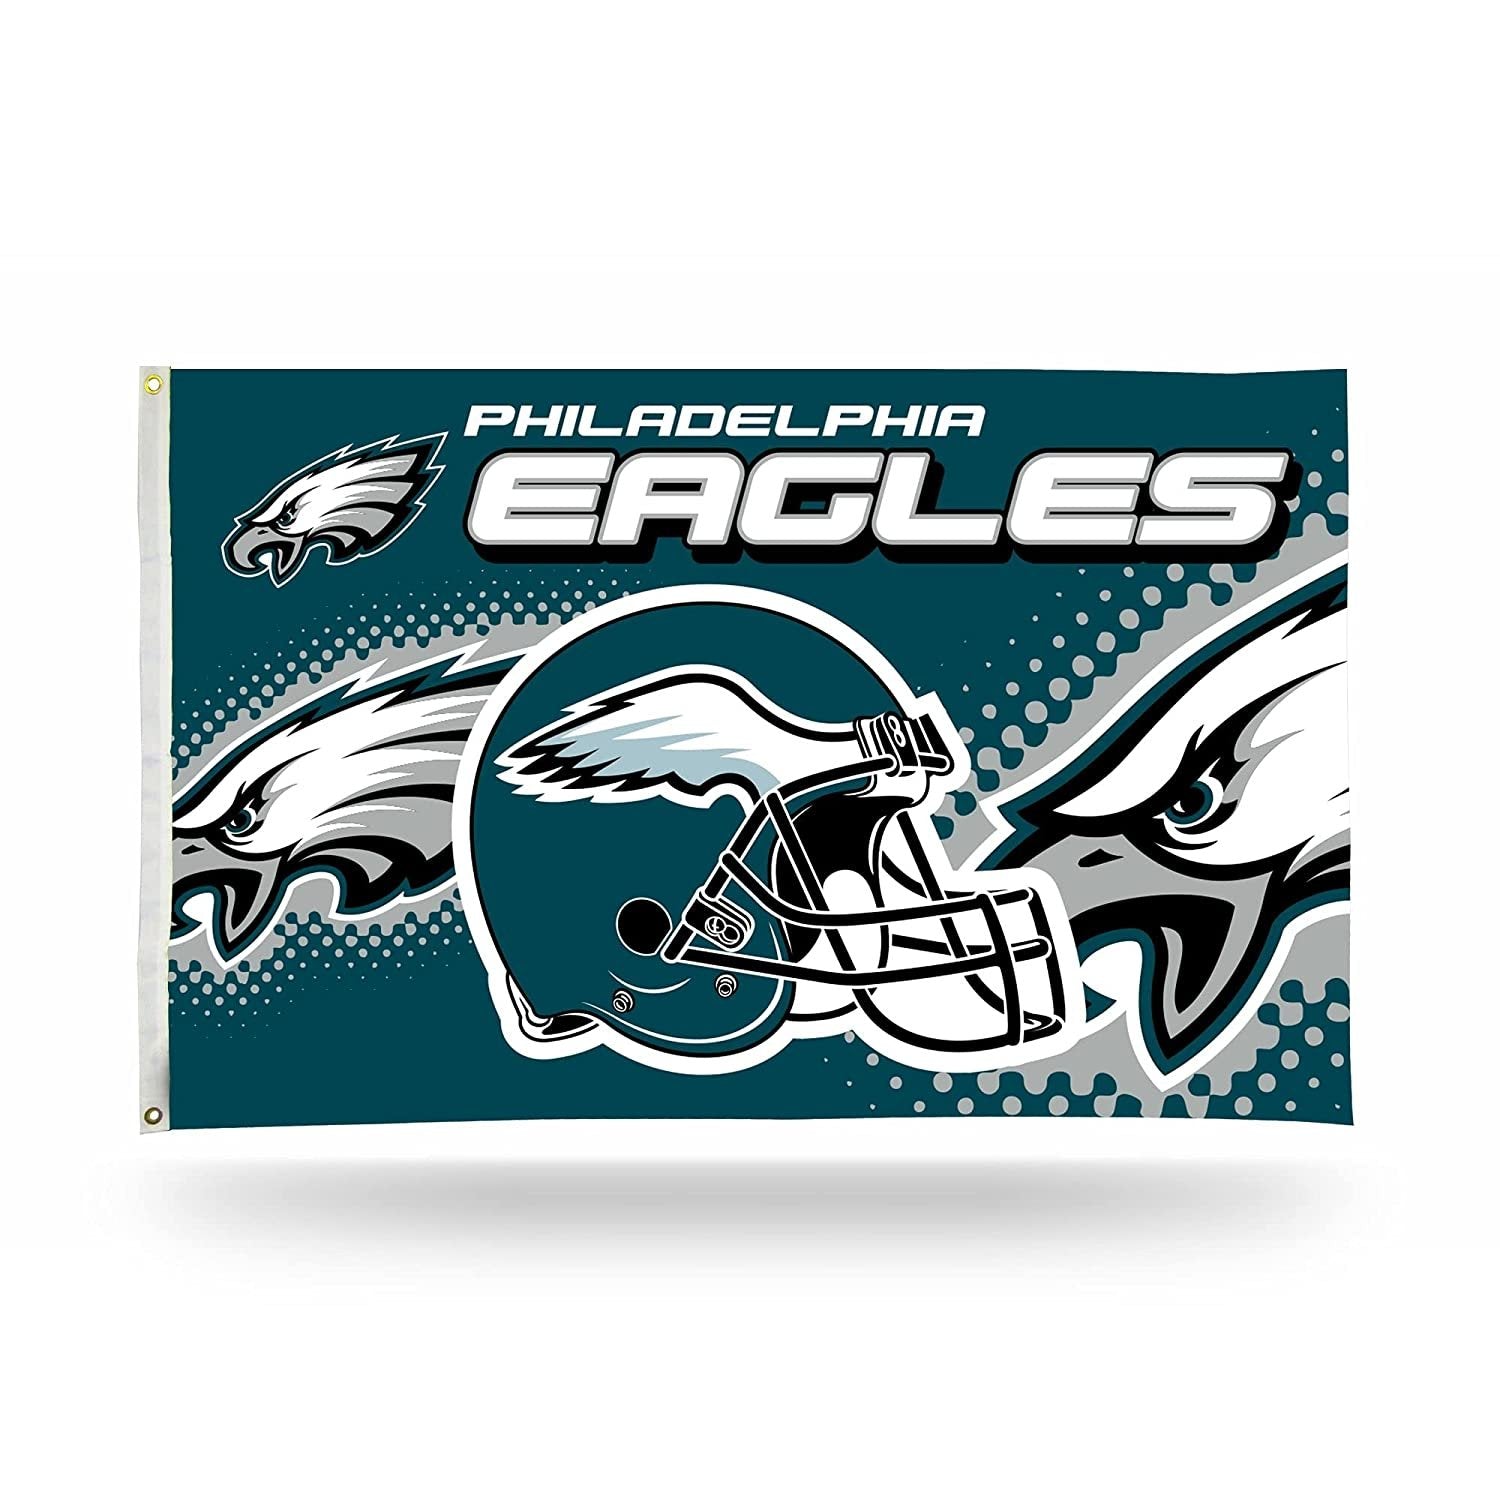 Philadelphia Eagles Premium 3x5 Feet Flag Banner, Helmet Design, Metal Grommets, Outdoor Use, Single Sided